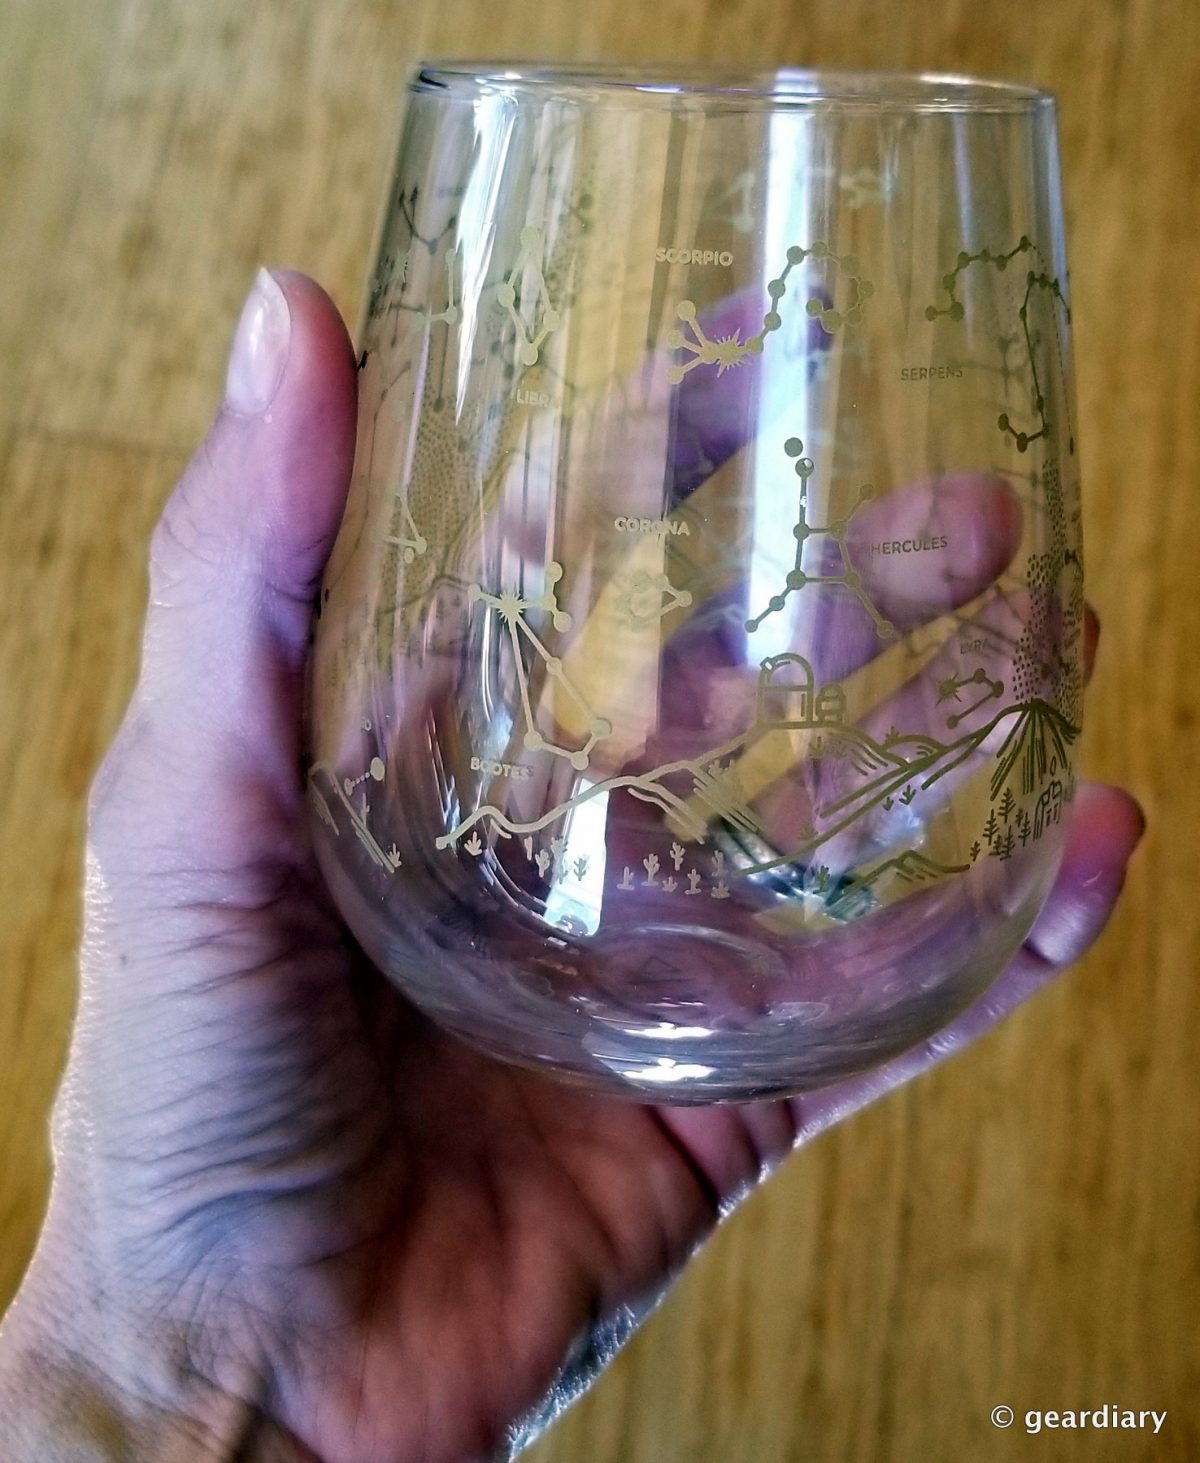 https://geardiary.com/wp-content/uploads/2017/11/4-Cognitive-Surplus-Science-Barware-Astonomy-Wine-Glasses-003.jpg